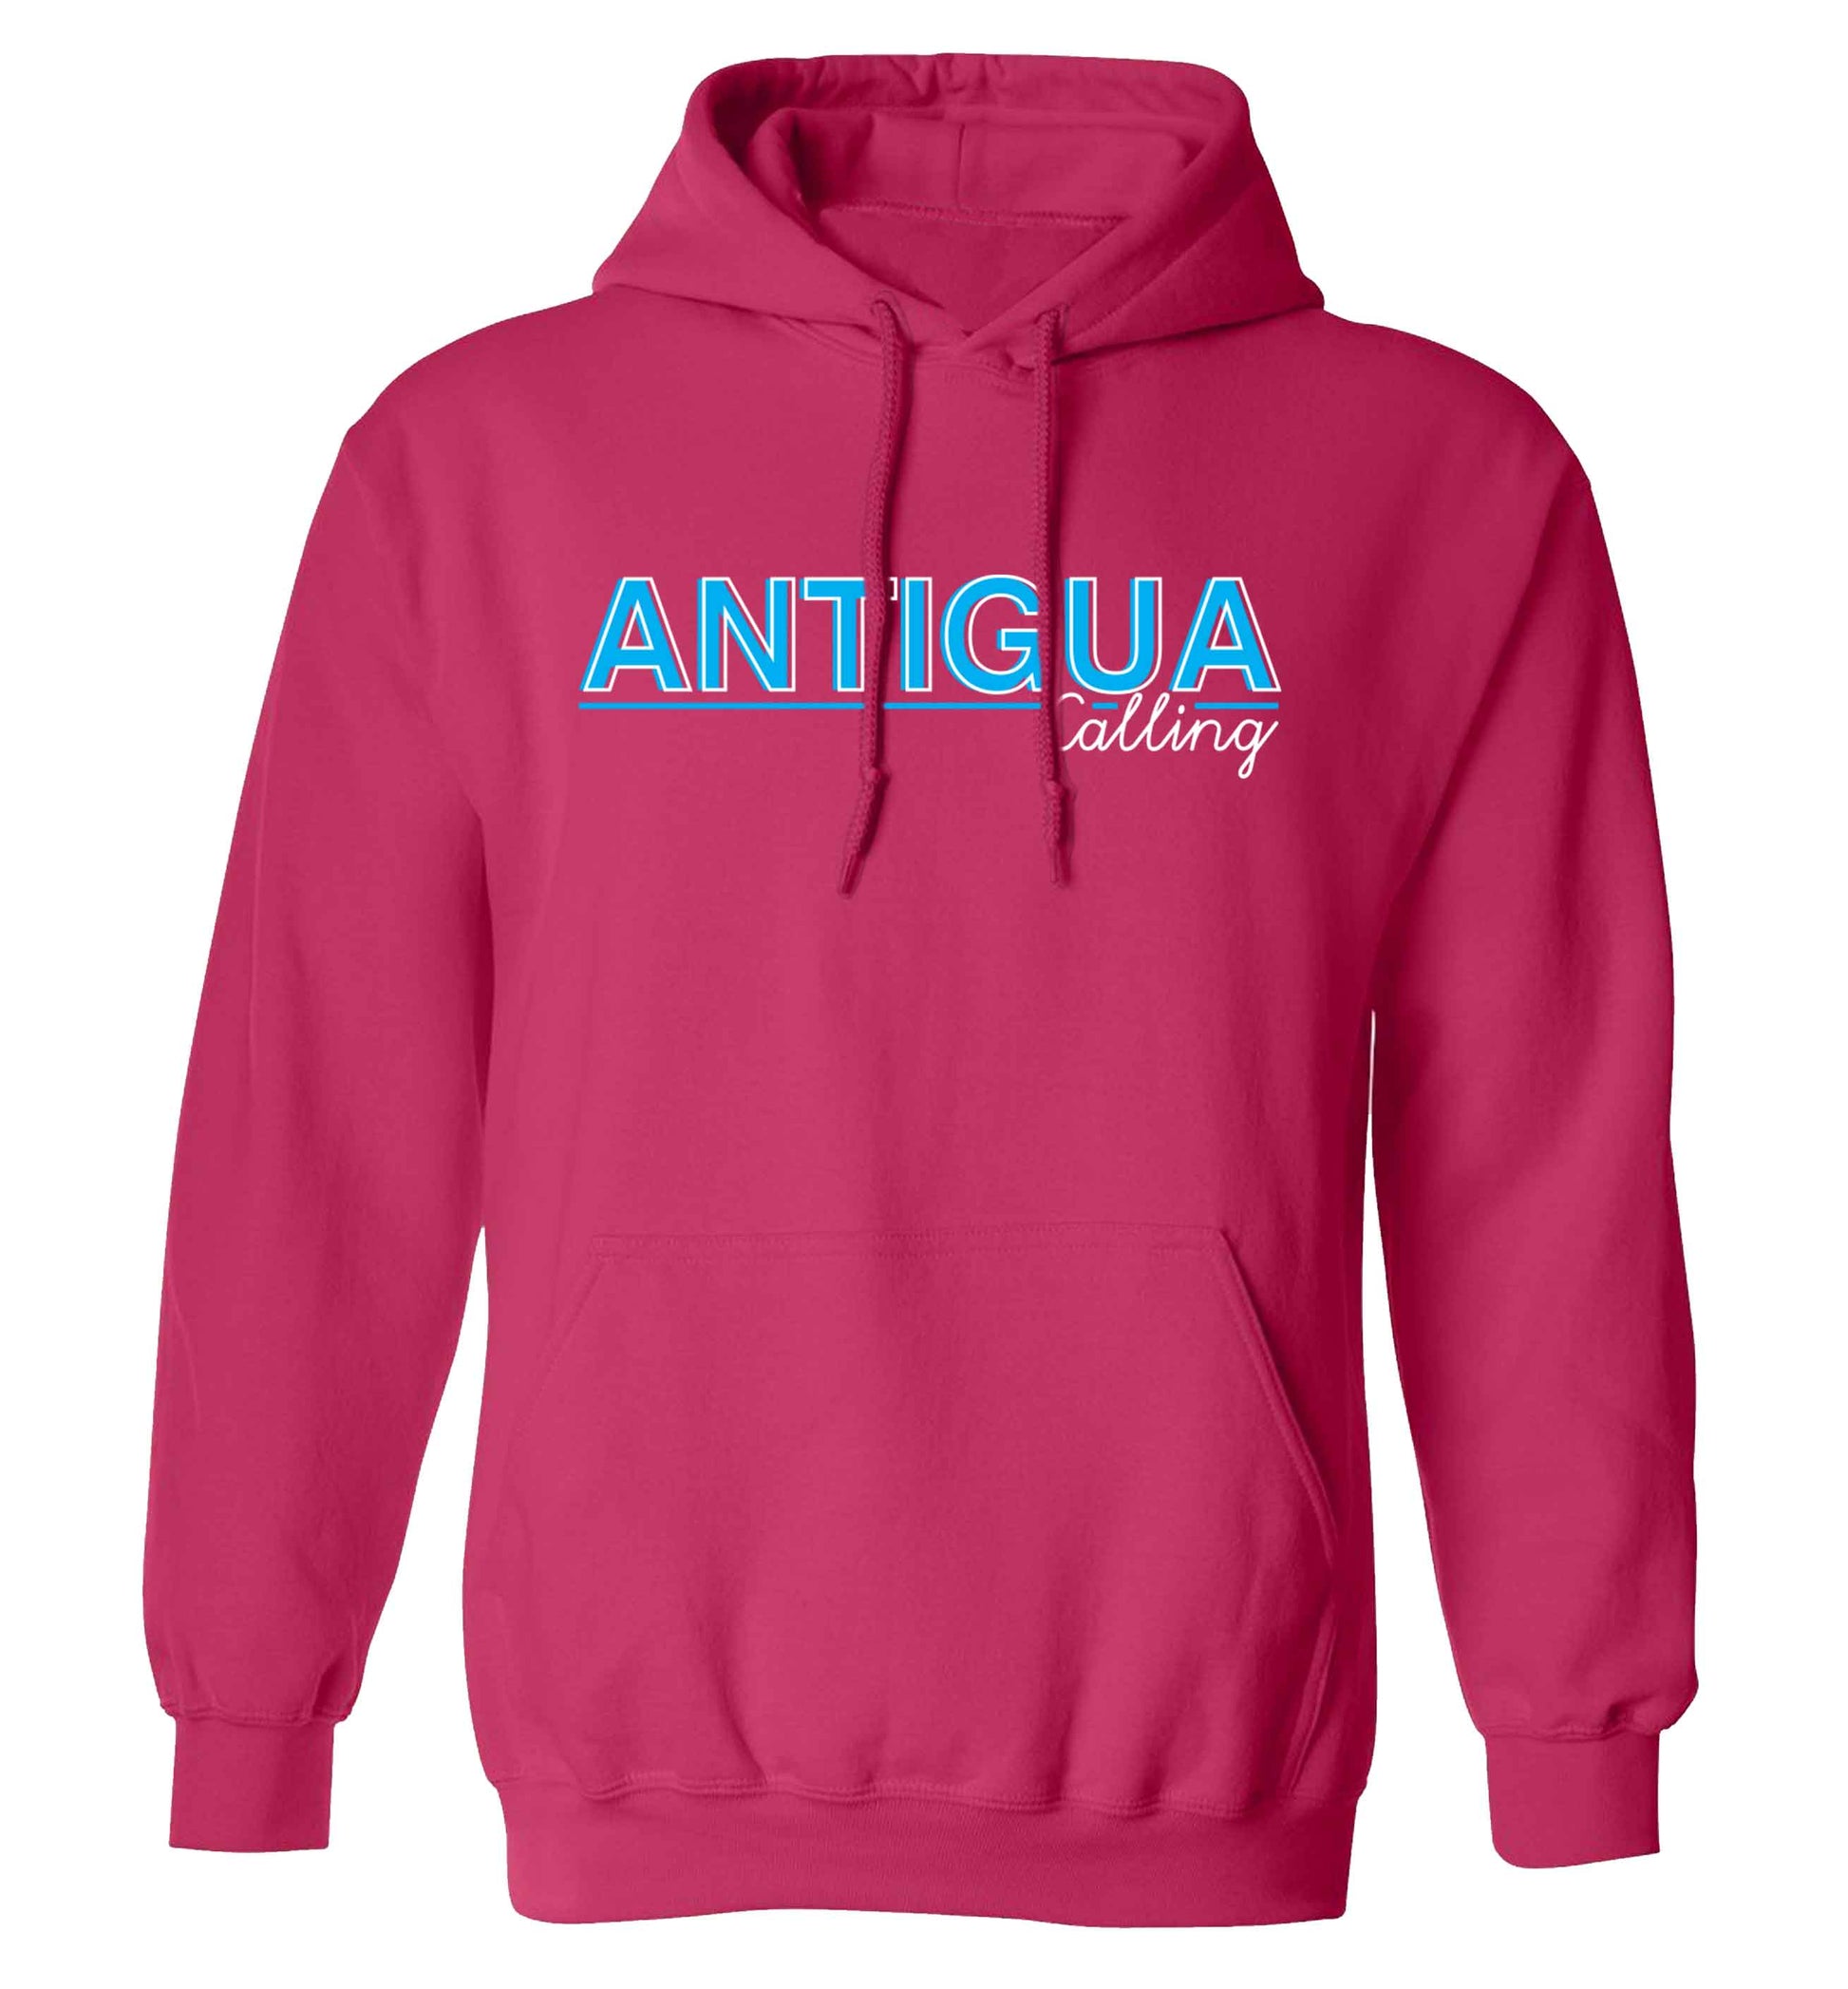 Antigua calling adults unisex pink hoodie 2XL